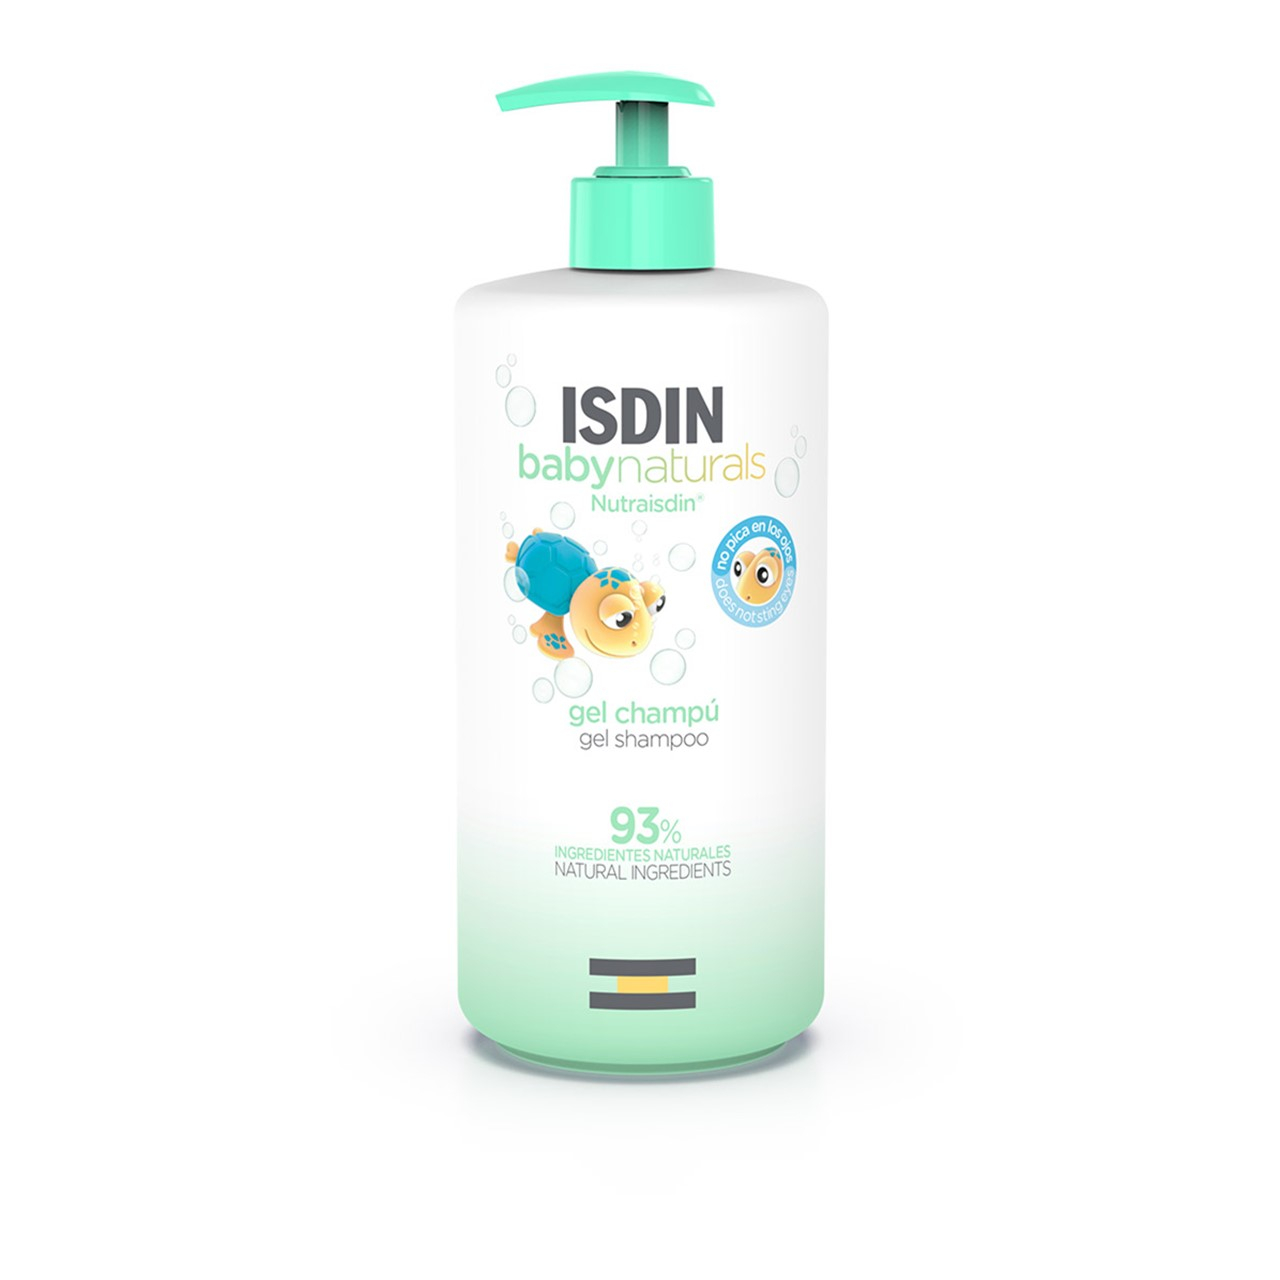 ISDIN Baby Naturals Gel Shampoo